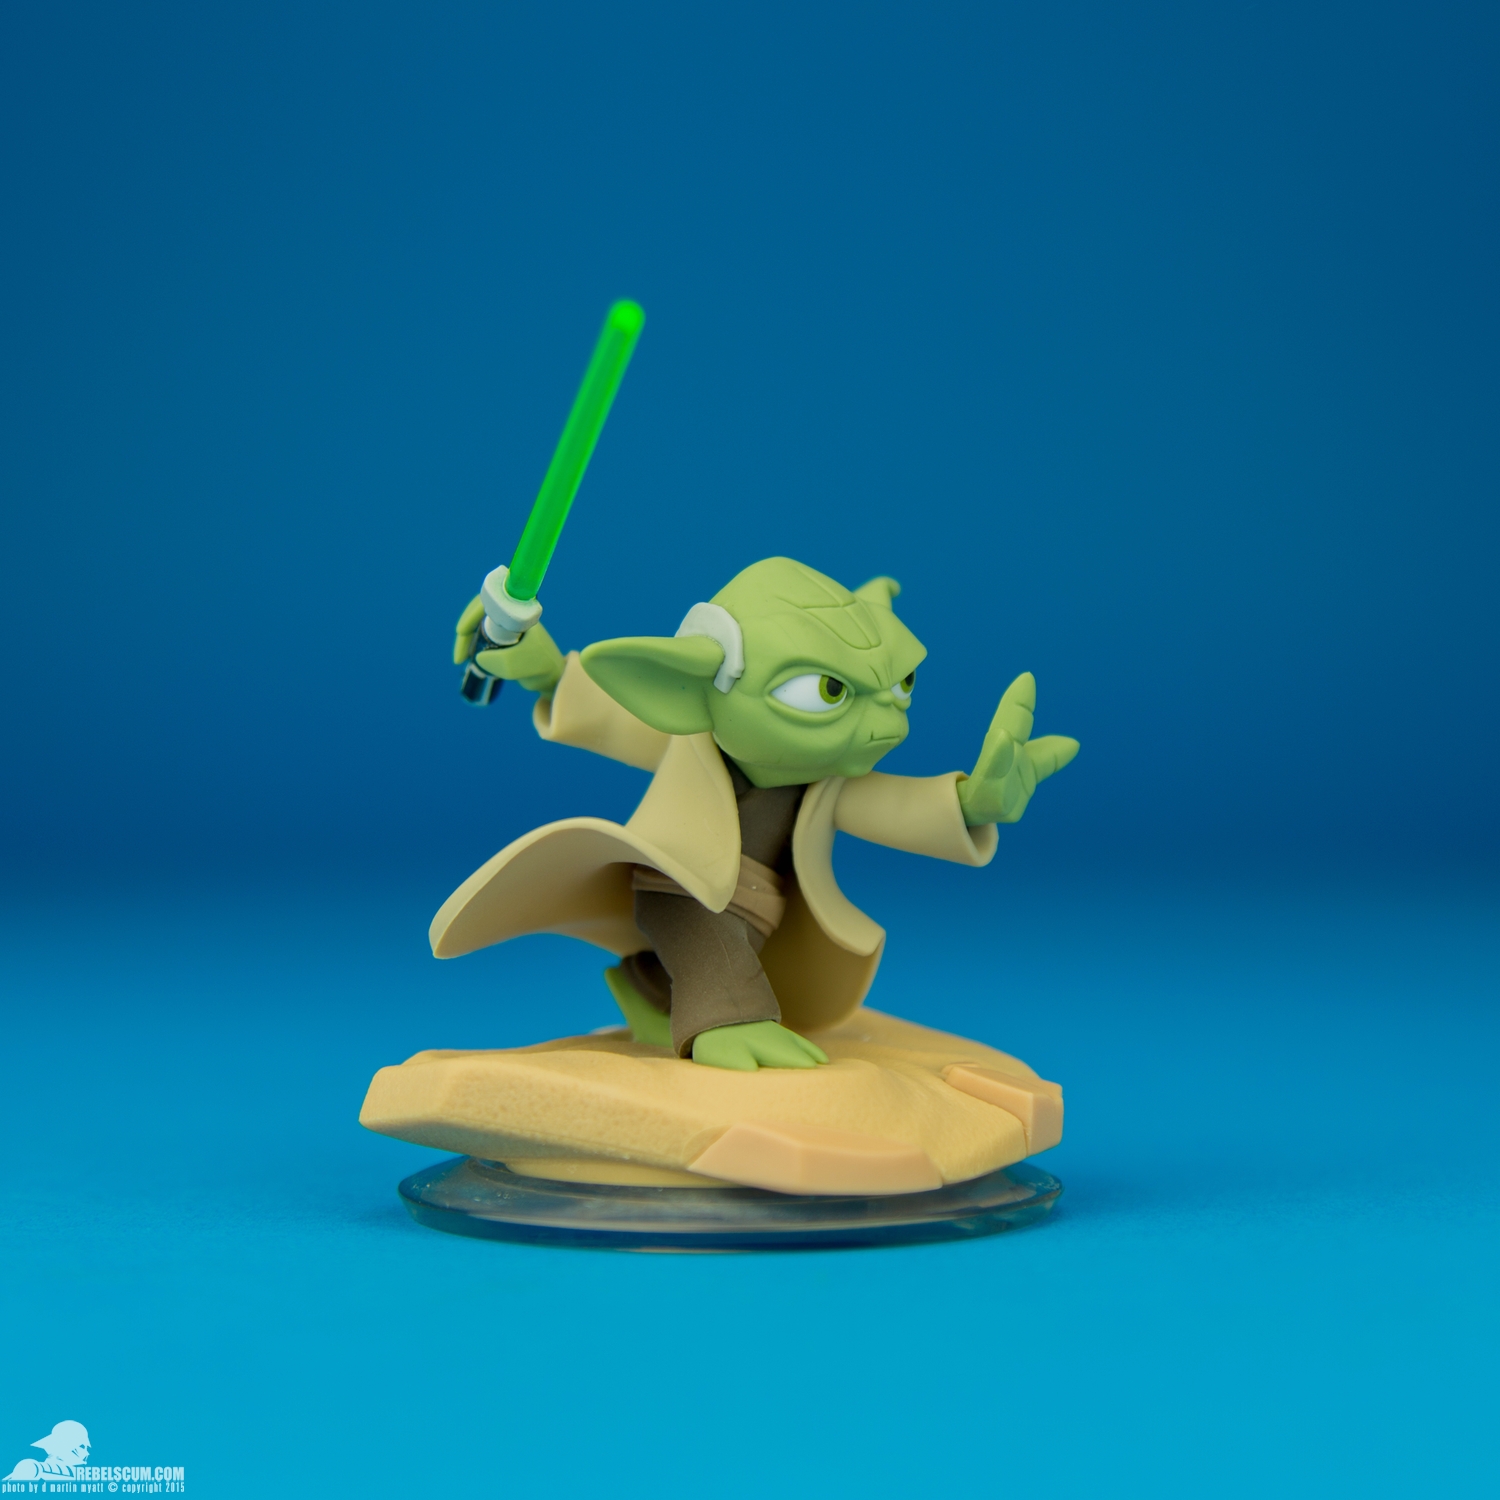 Disney-Infinity-3-Star-Wars-Yoda-002.jpg